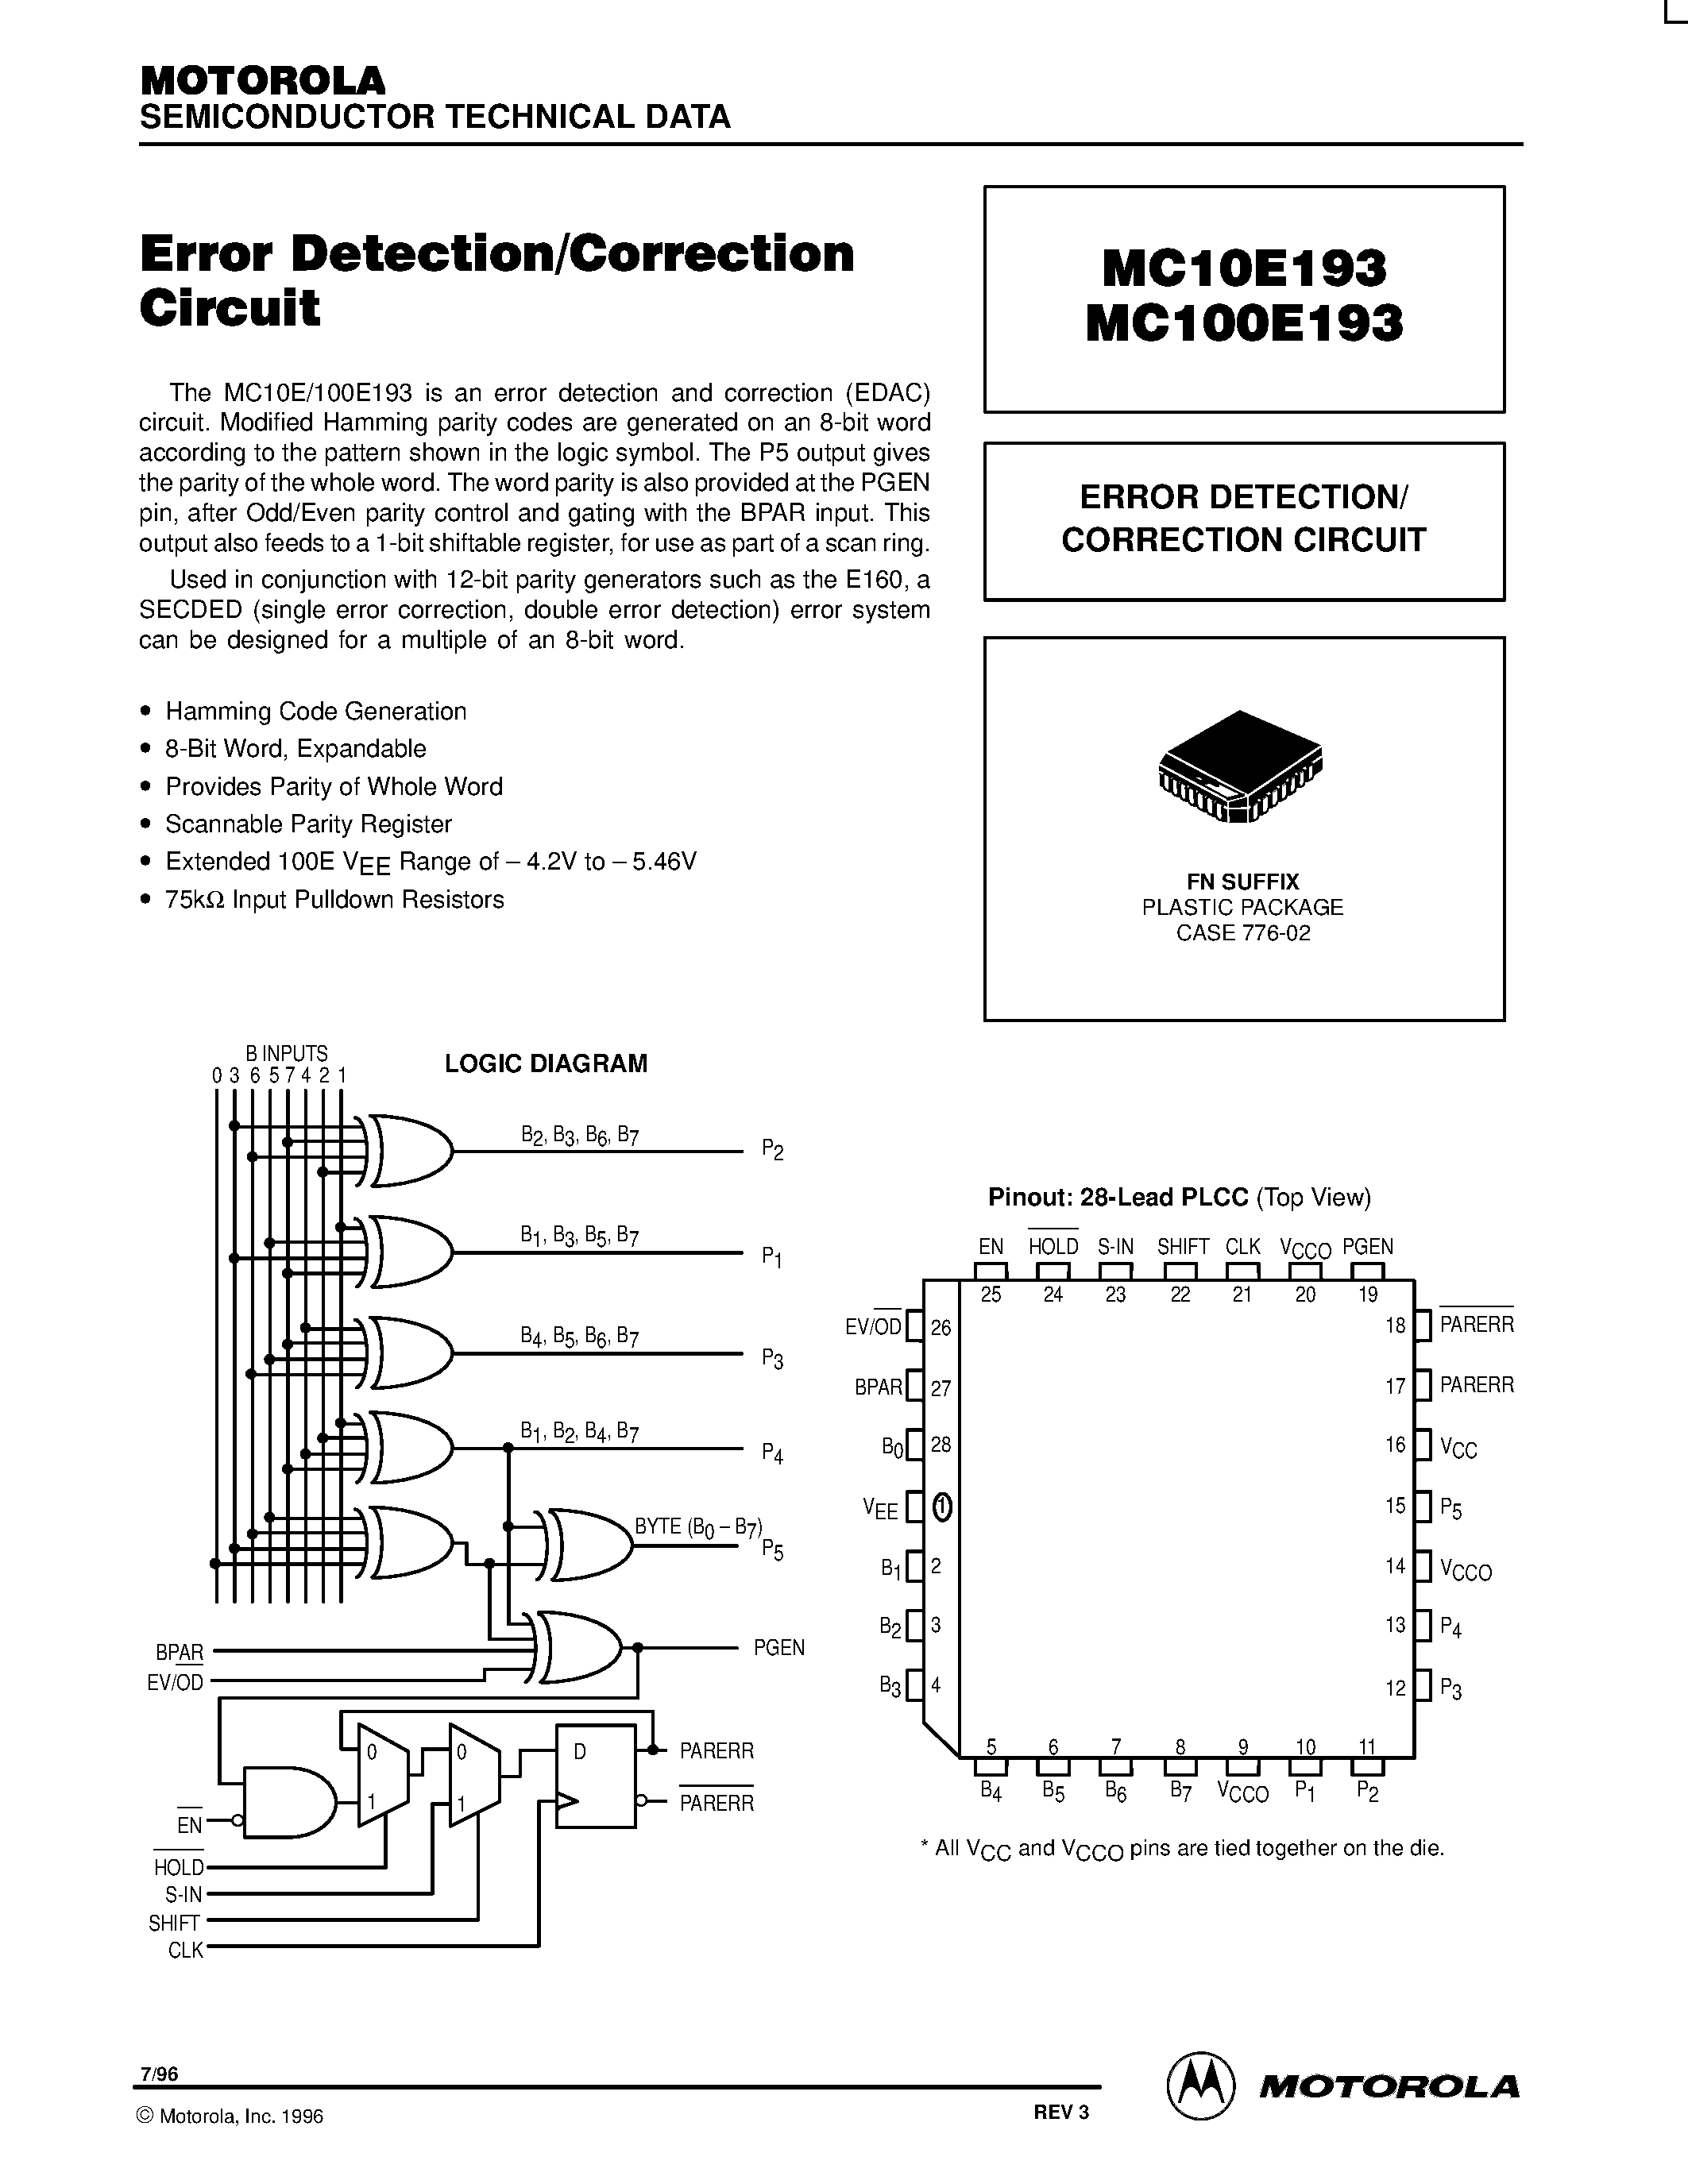 Datasheet MC100E193FN - ERROR DETECTION/ CORRECTION CIRCUIT page 1